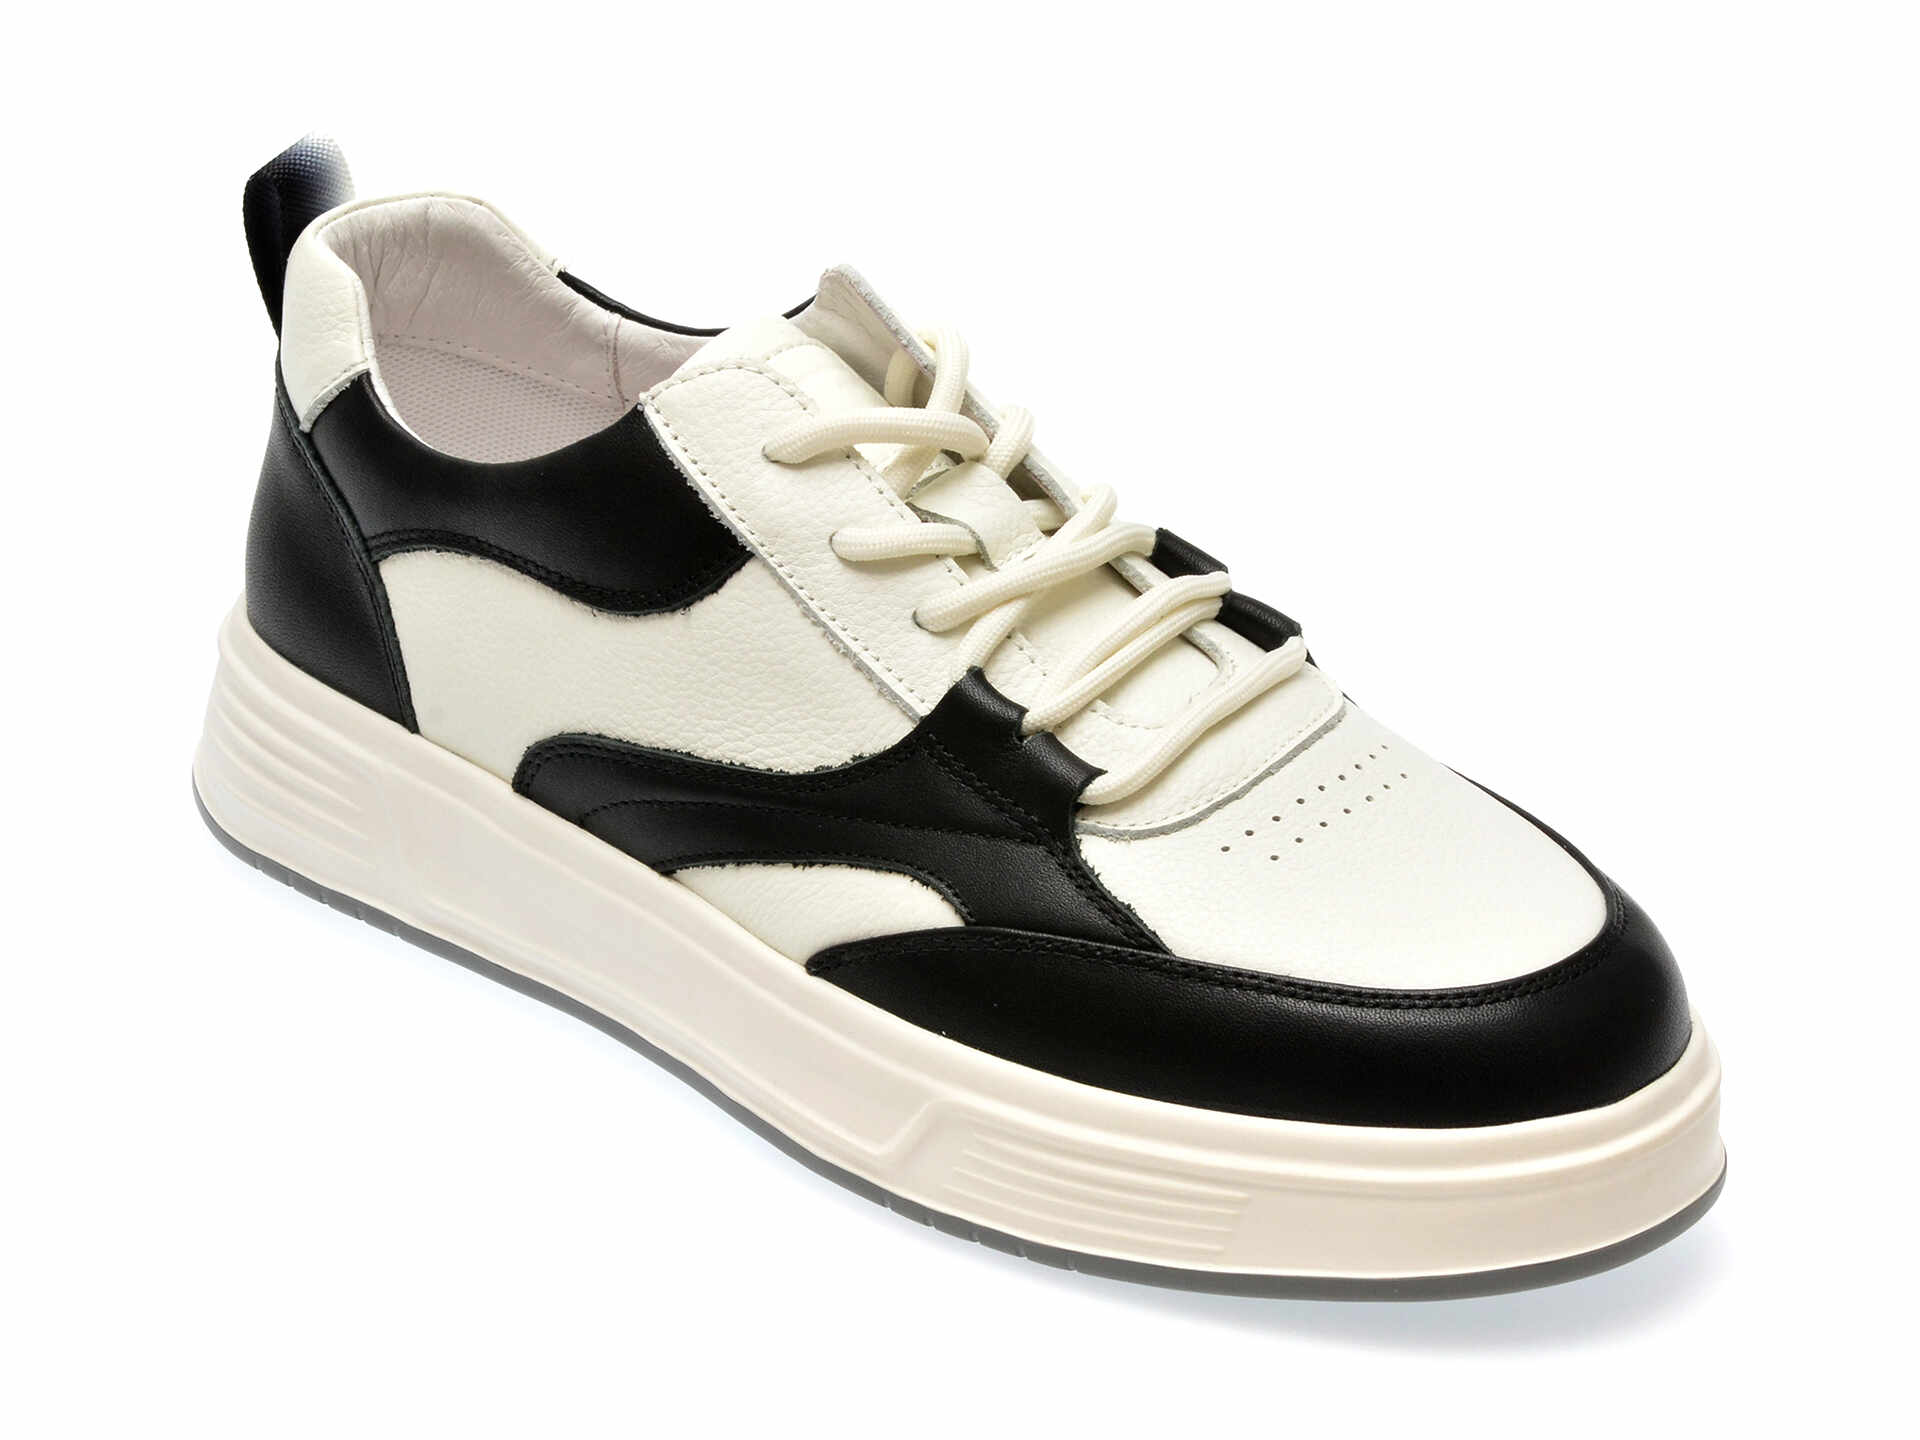 Pantofi casual BITE THE BULLET alb-negru, 3512, din piele naturala